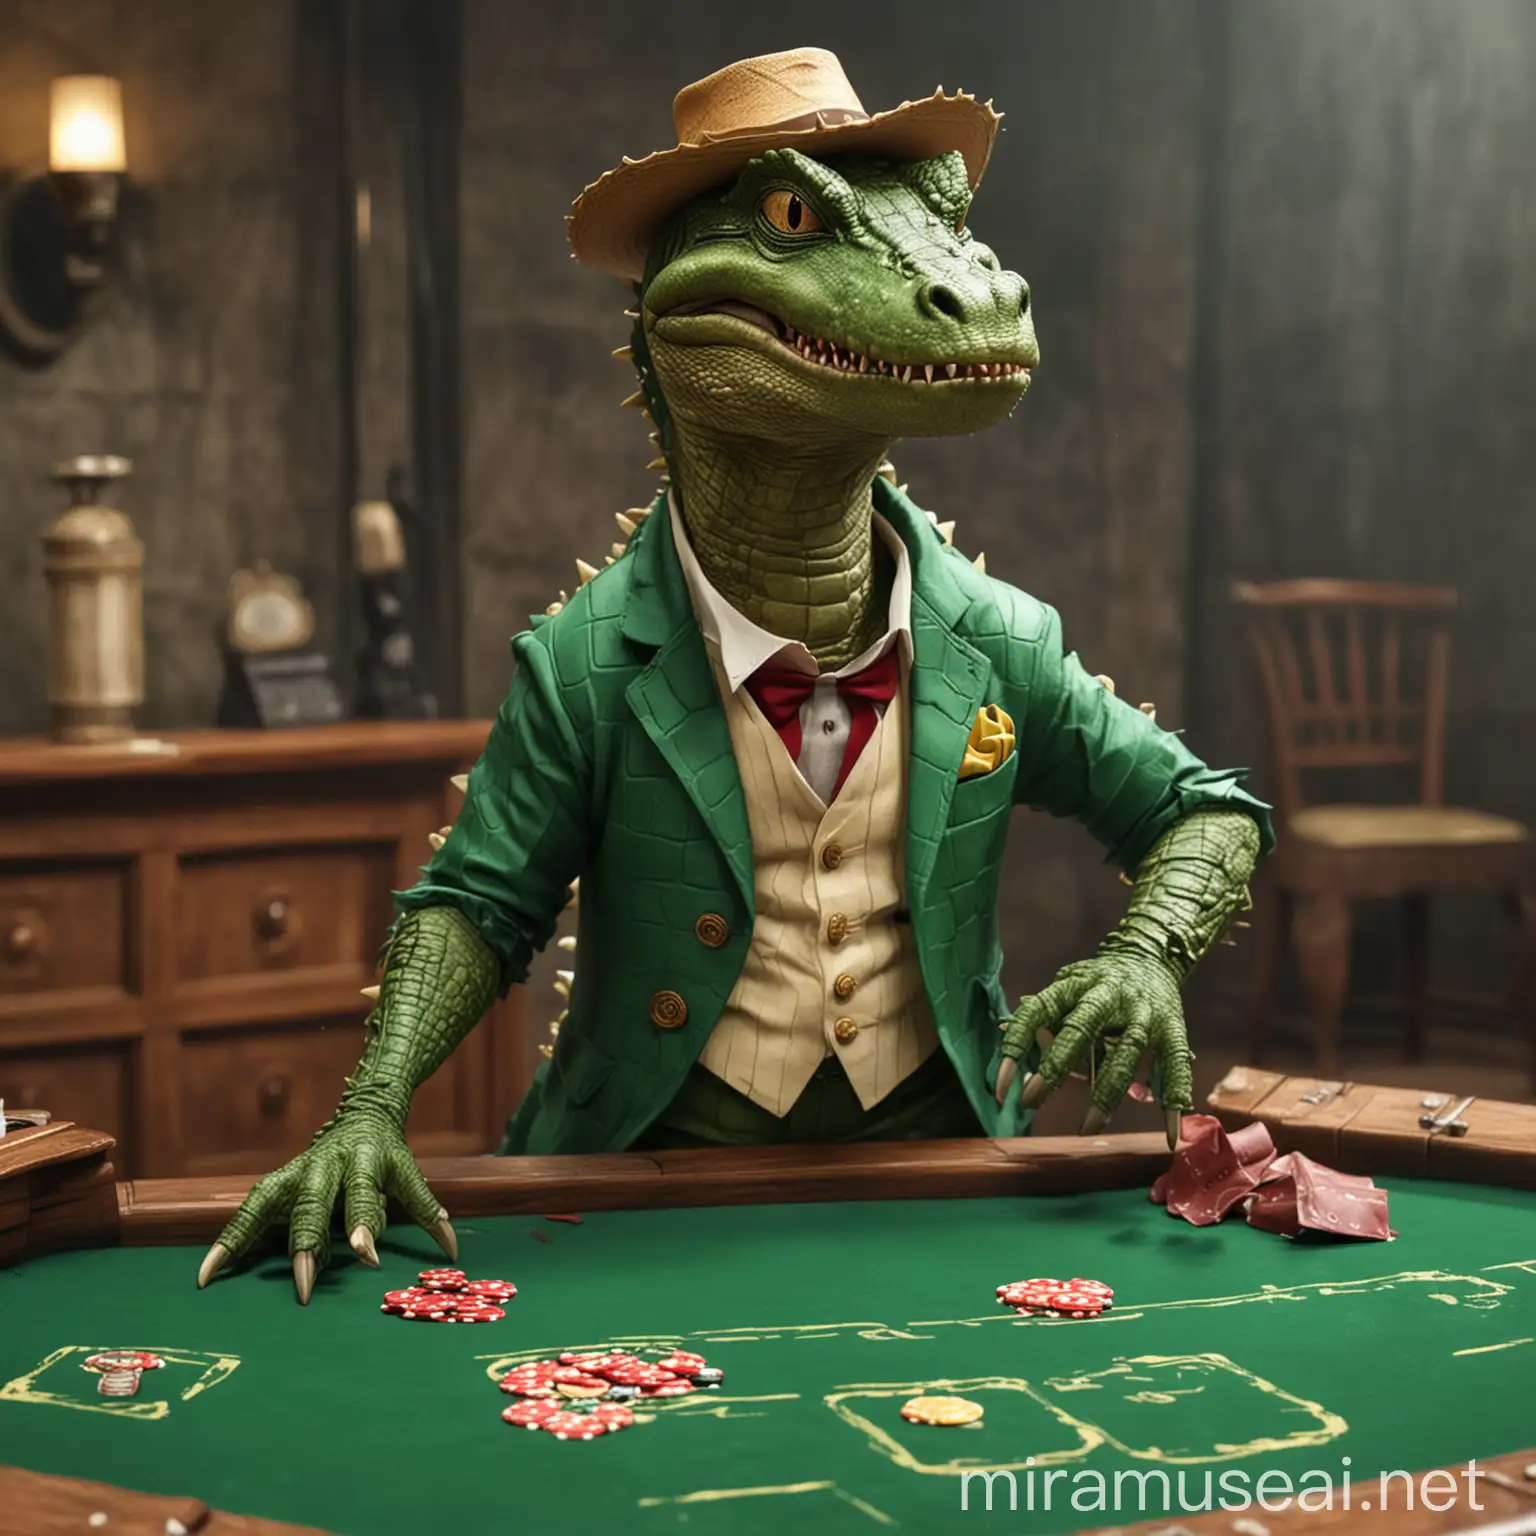 Animated Crocodile Playing Poker